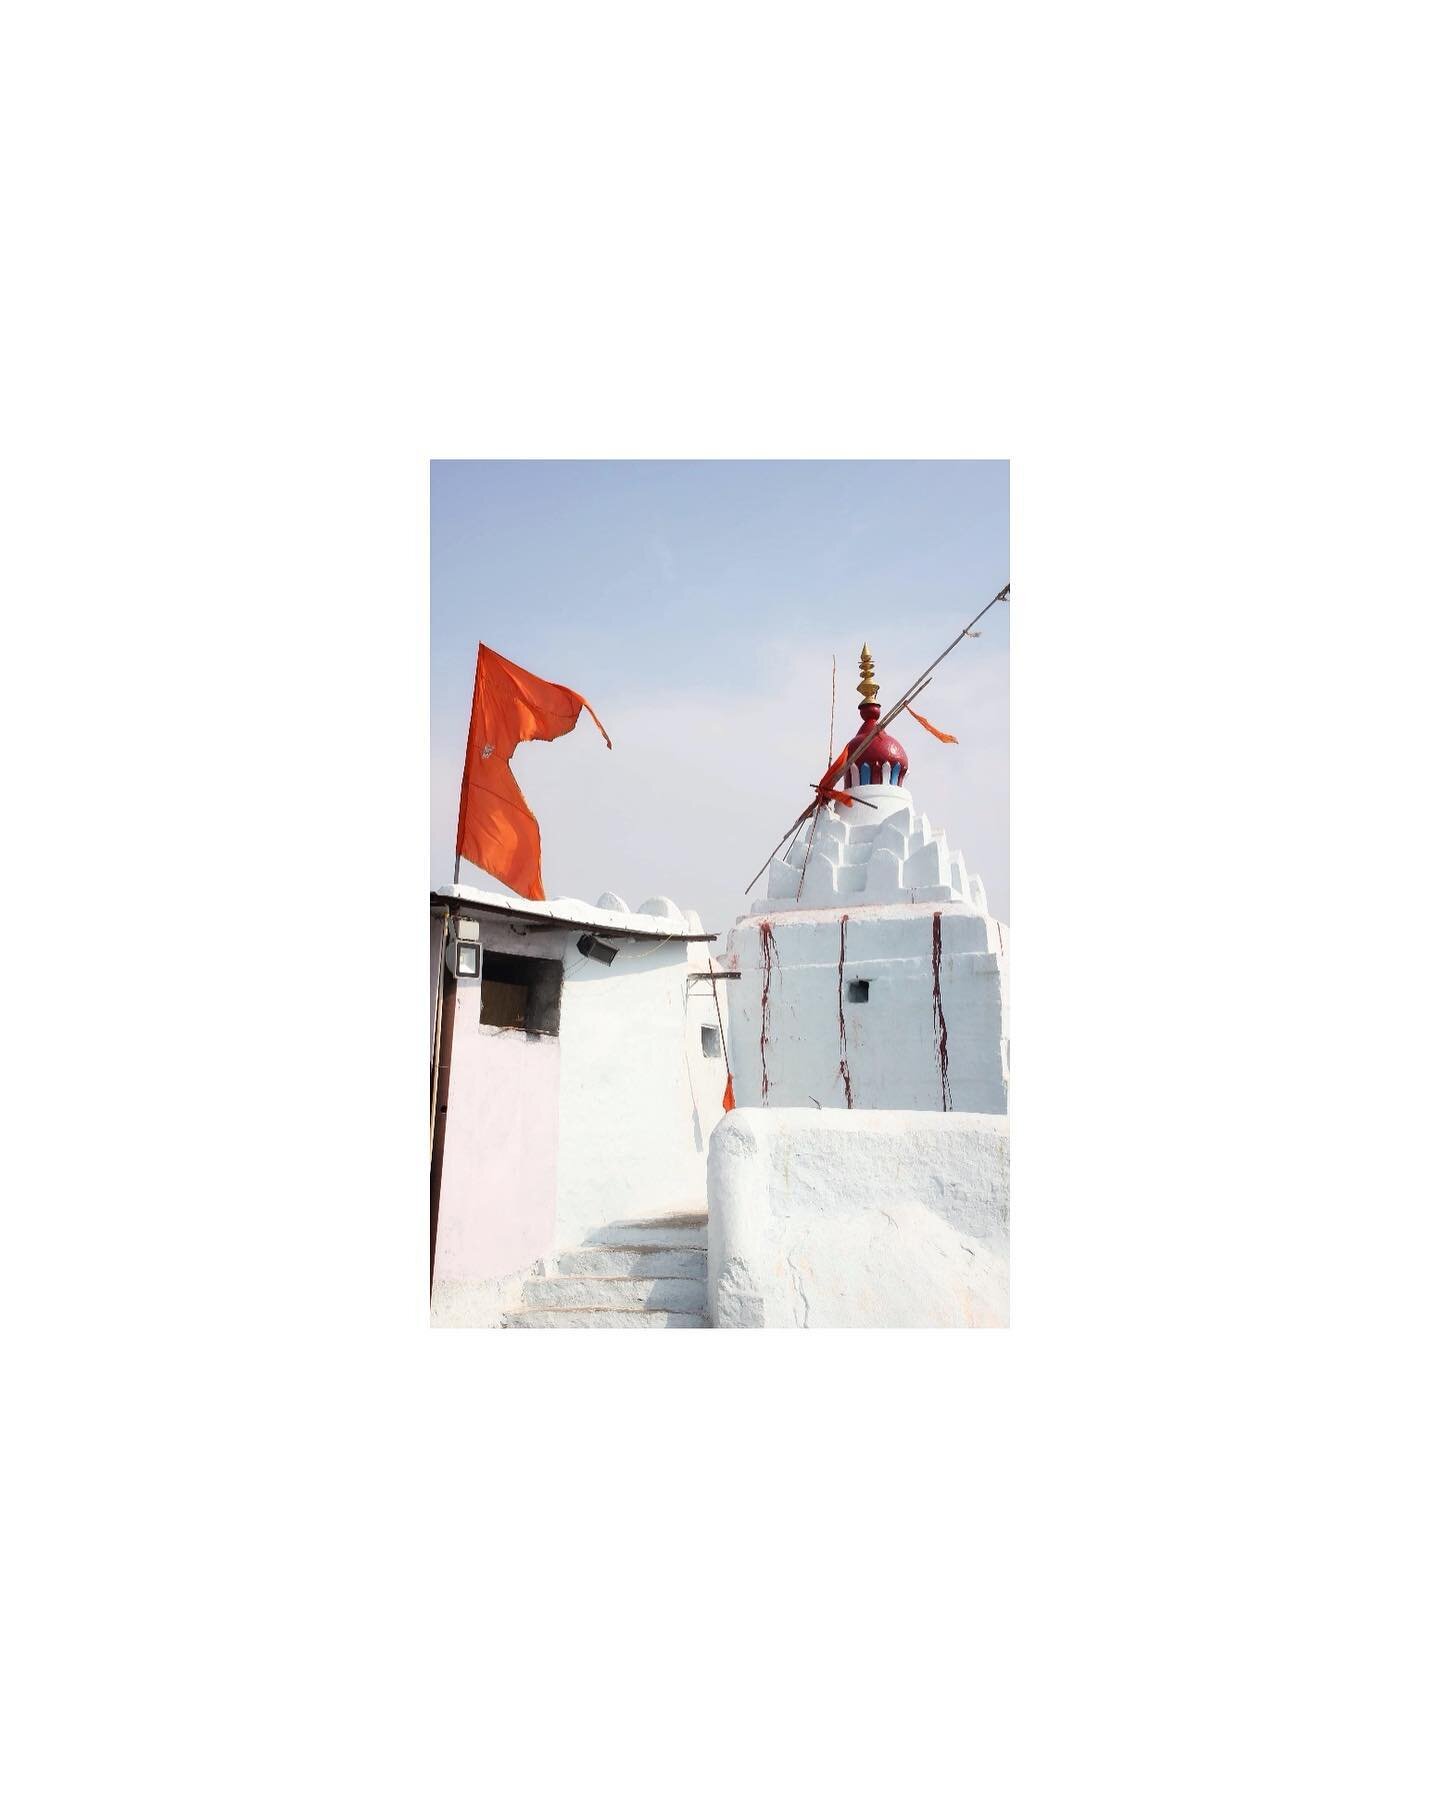 #Hanumantemple#hanuman#temple#whitetemple#monkeygod#indiantemple#topofthemountain#hampi#india#oldie#2014
#digitalphotography#canon550d#whitephotography